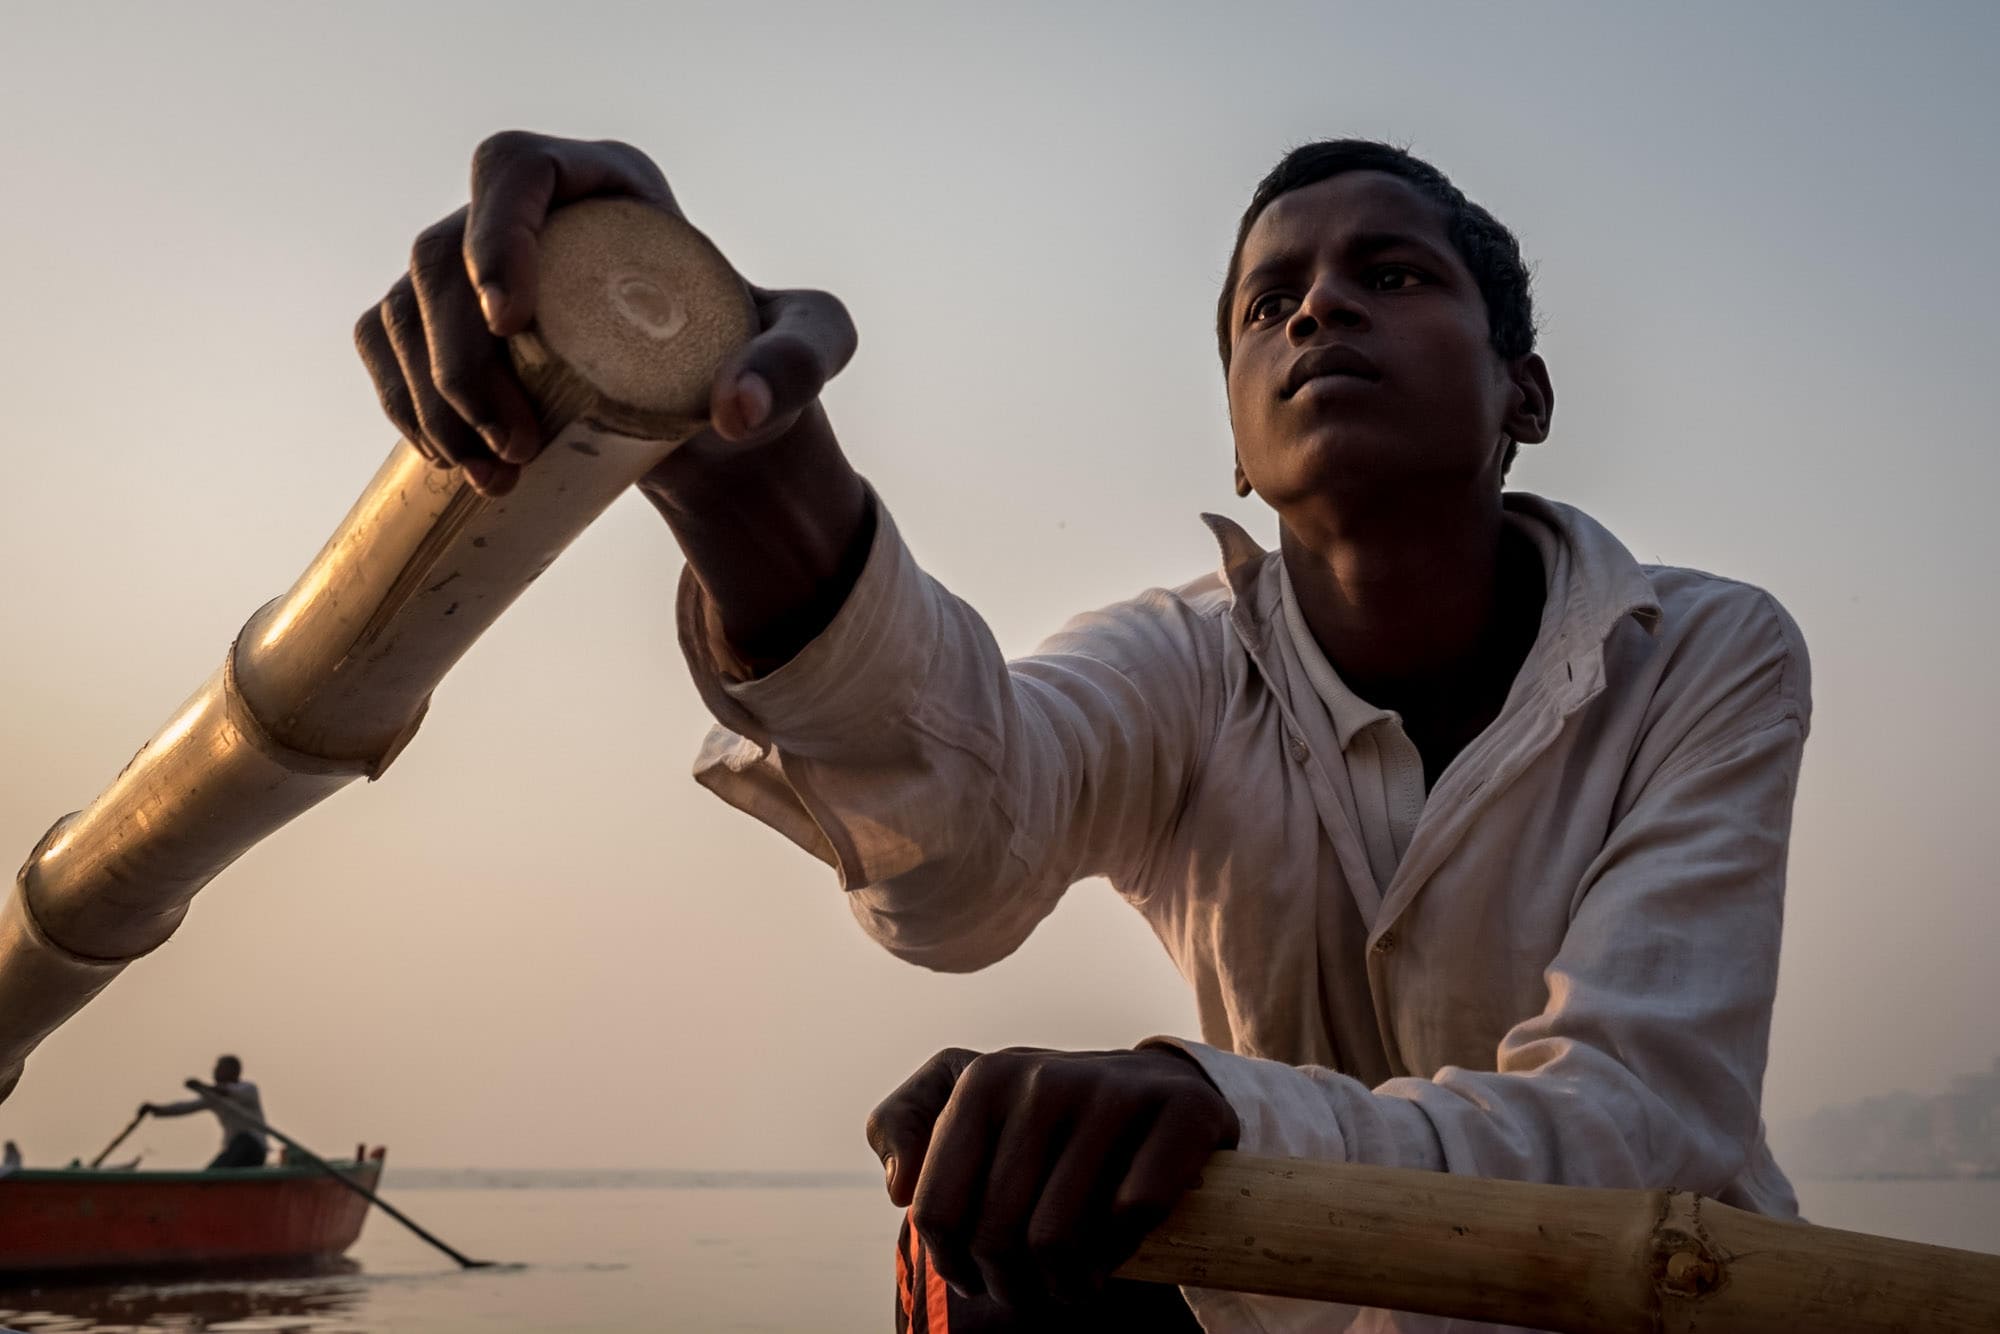 Boy rowing boat at sunrise on Ganges in Varanasi, India